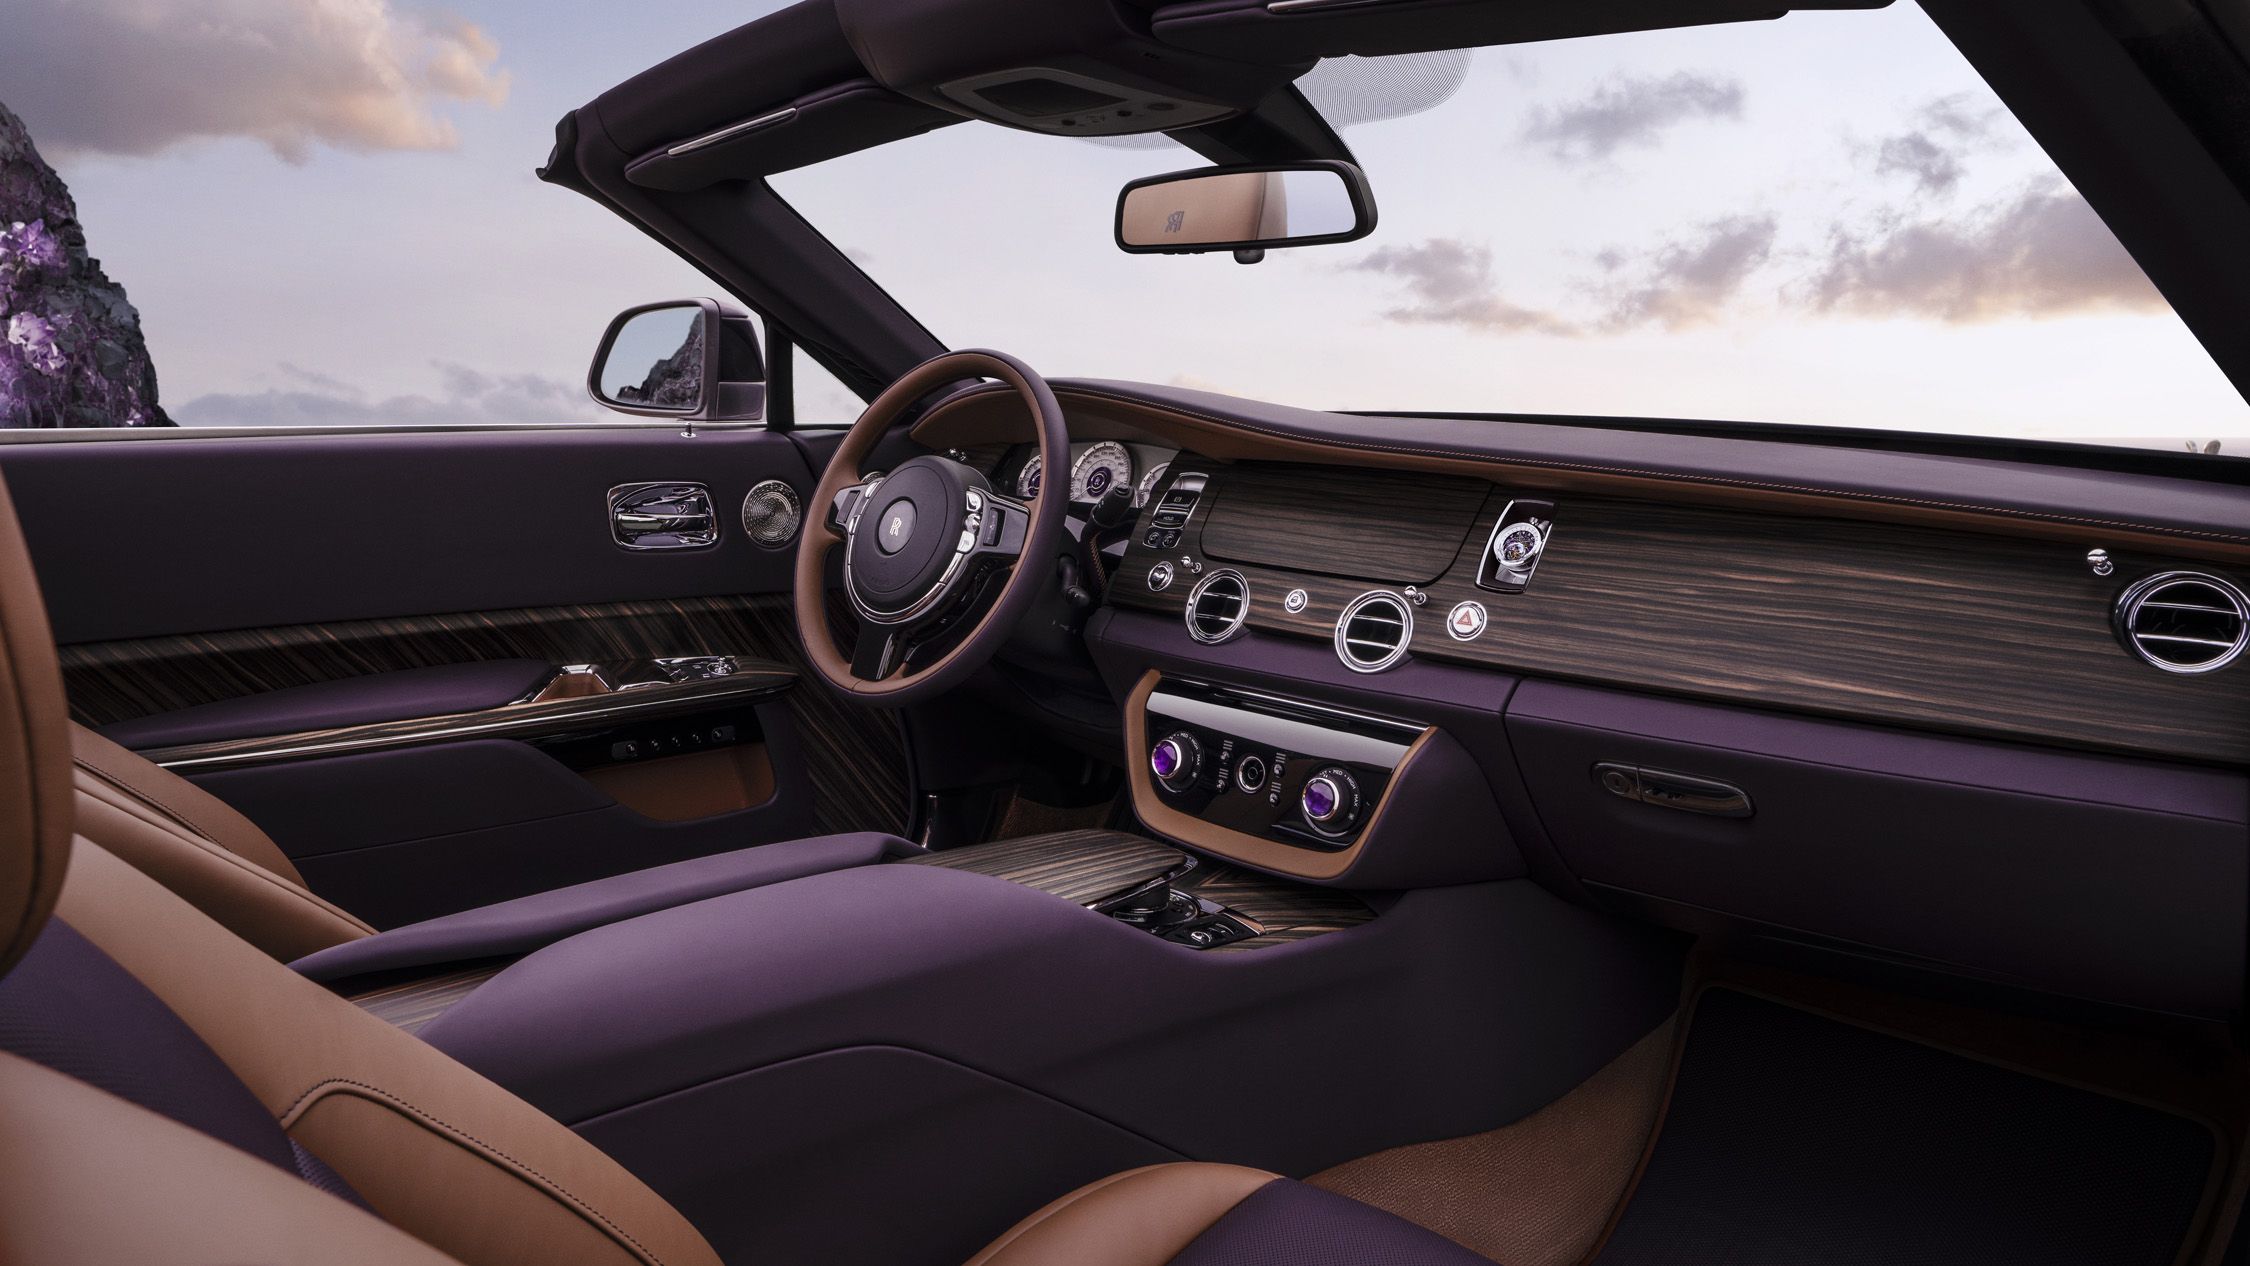 In pics: Rolls-Royce Amethyst Droptail is an exclusive purple roadster